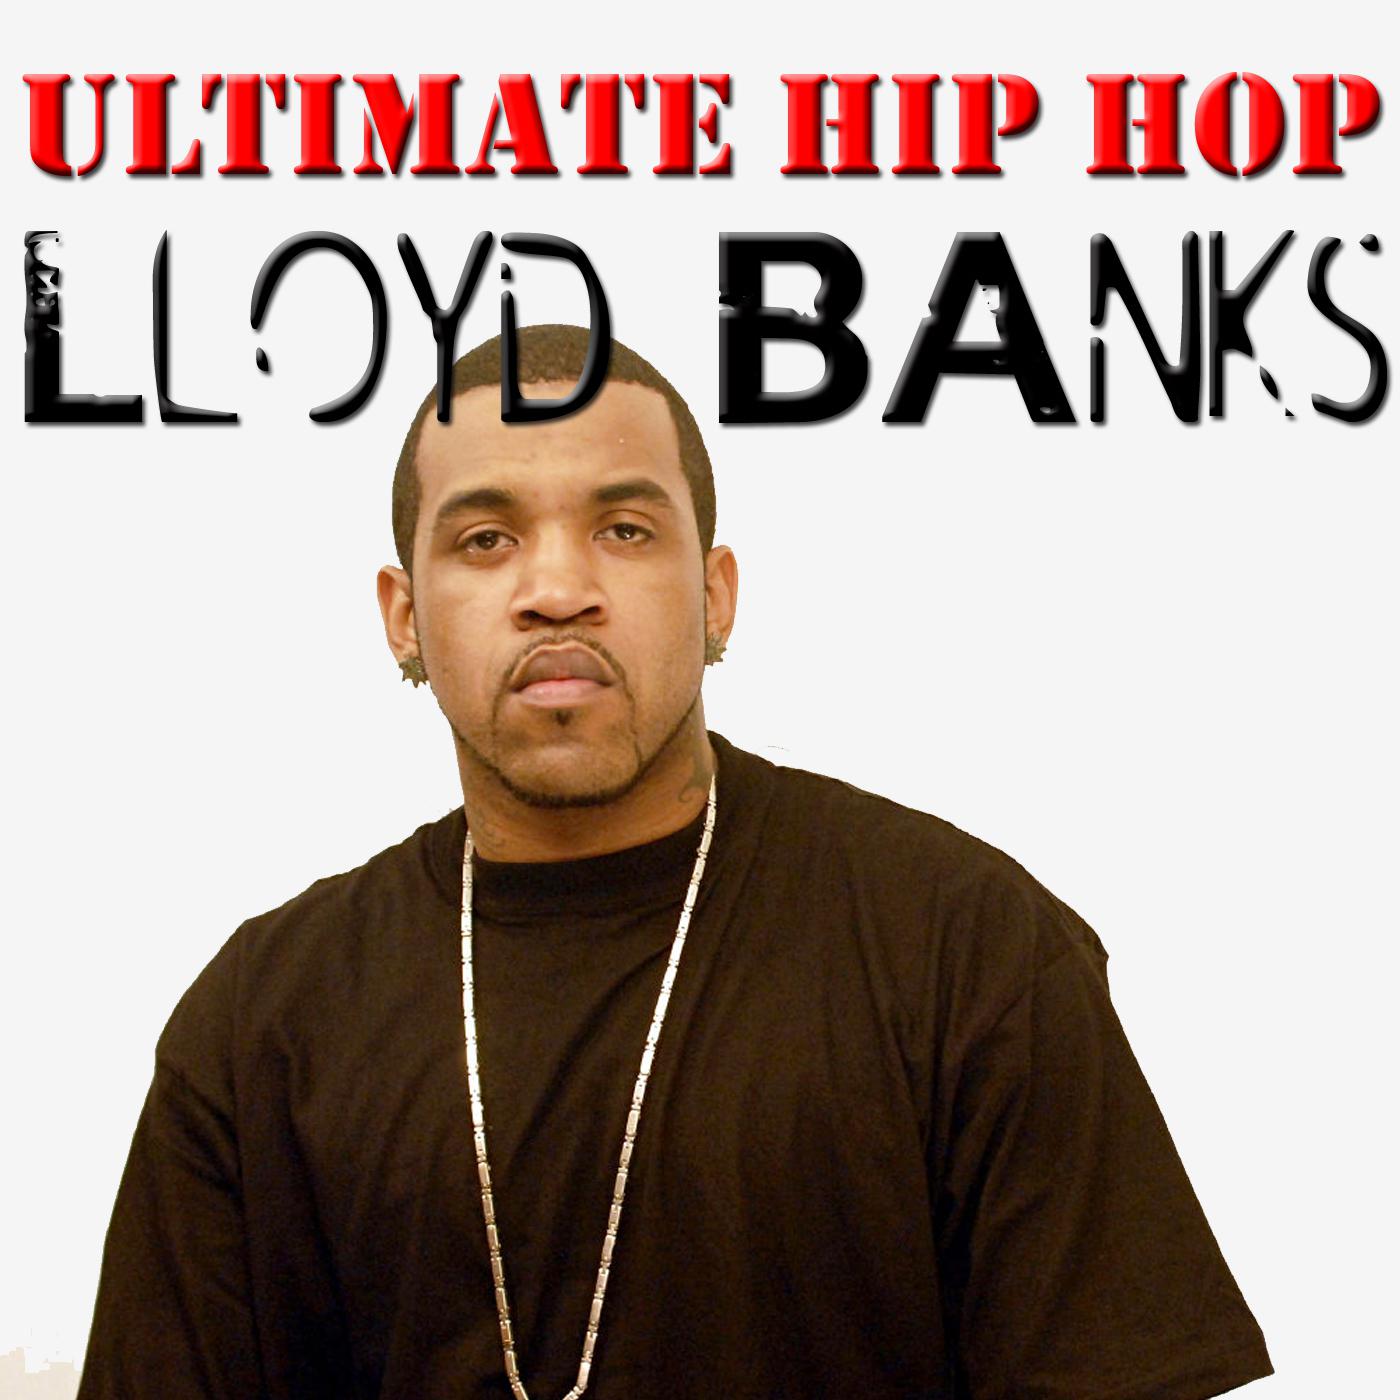 Ultimate Hip Hop: Lloyd Banks